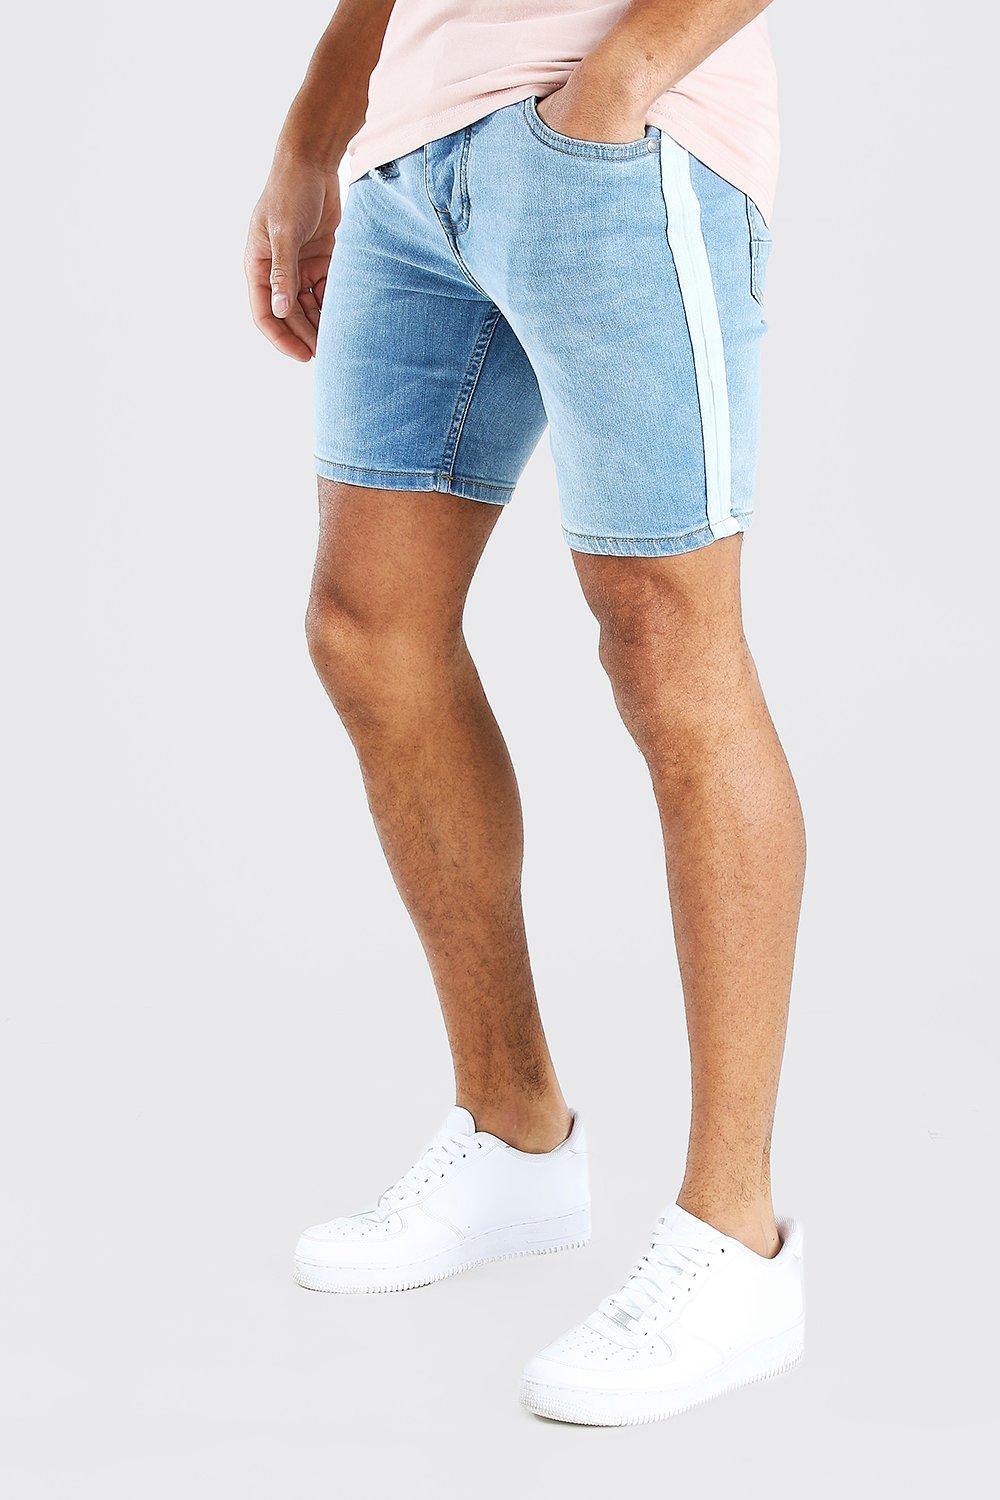 skinny fit jean shorts